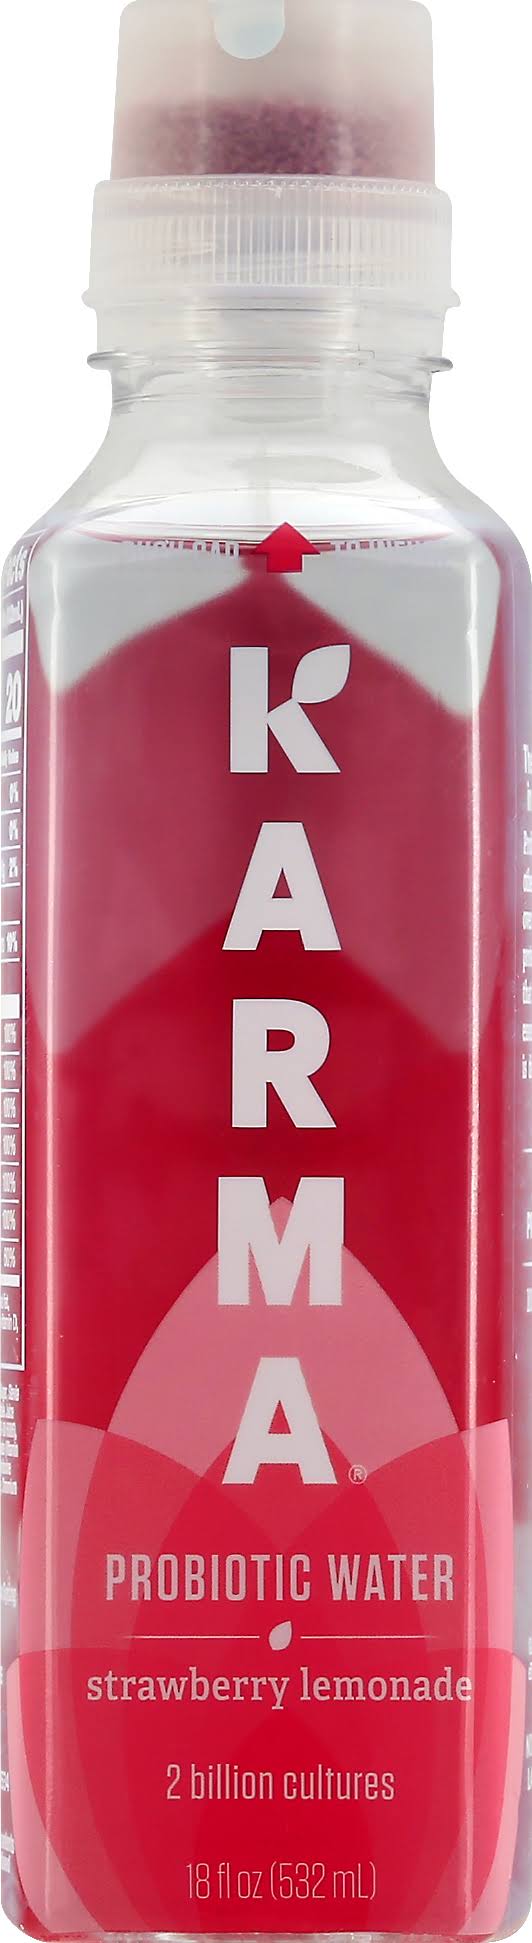 Karma Wellness Water 311294 18 FL oz Beverage Probiotics Strawberry Lemonade - Pack of 12